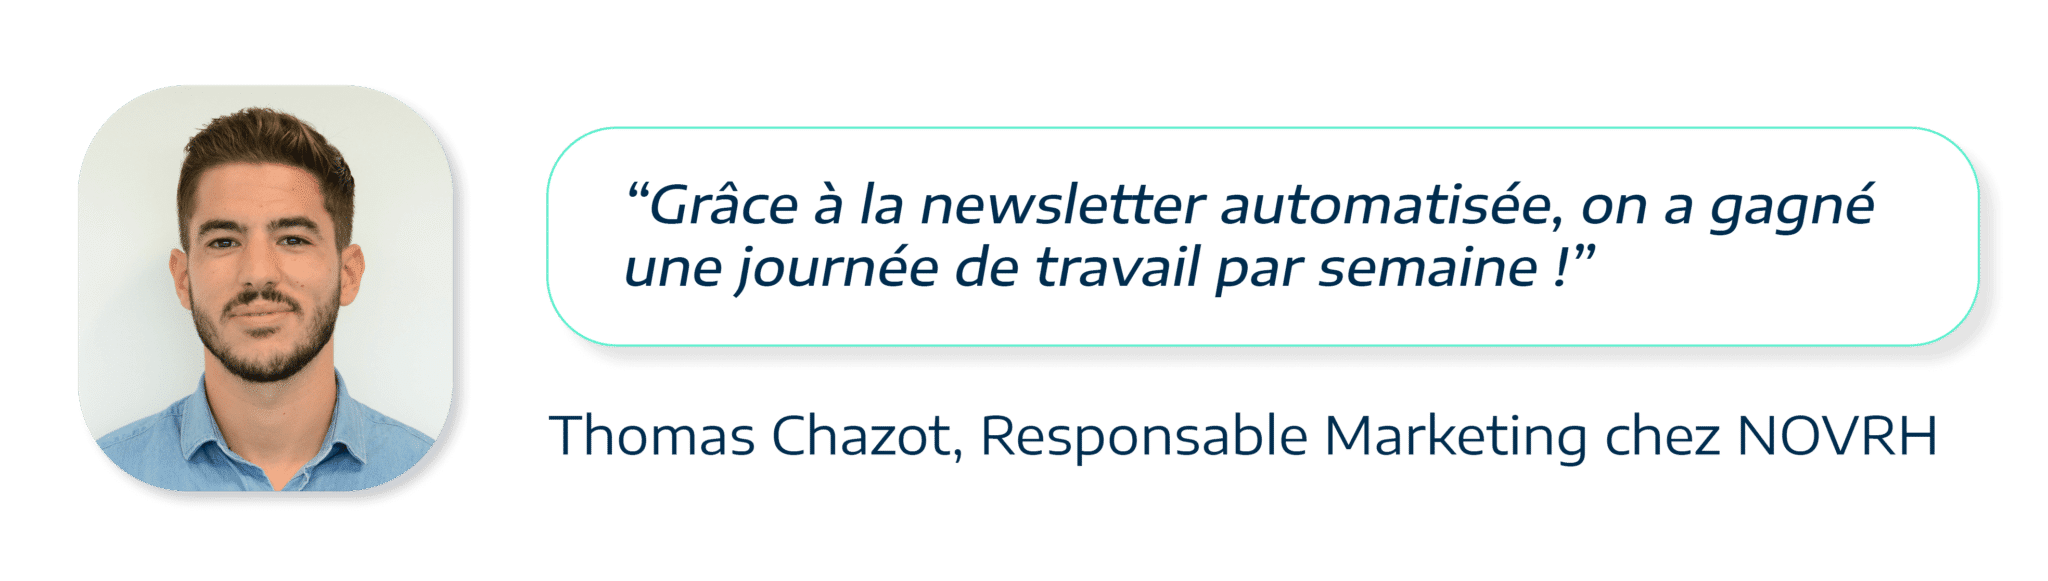 témoignage de Thomas Chazot, responsable marketing chez NOVRH, sur la newsletter Plezi